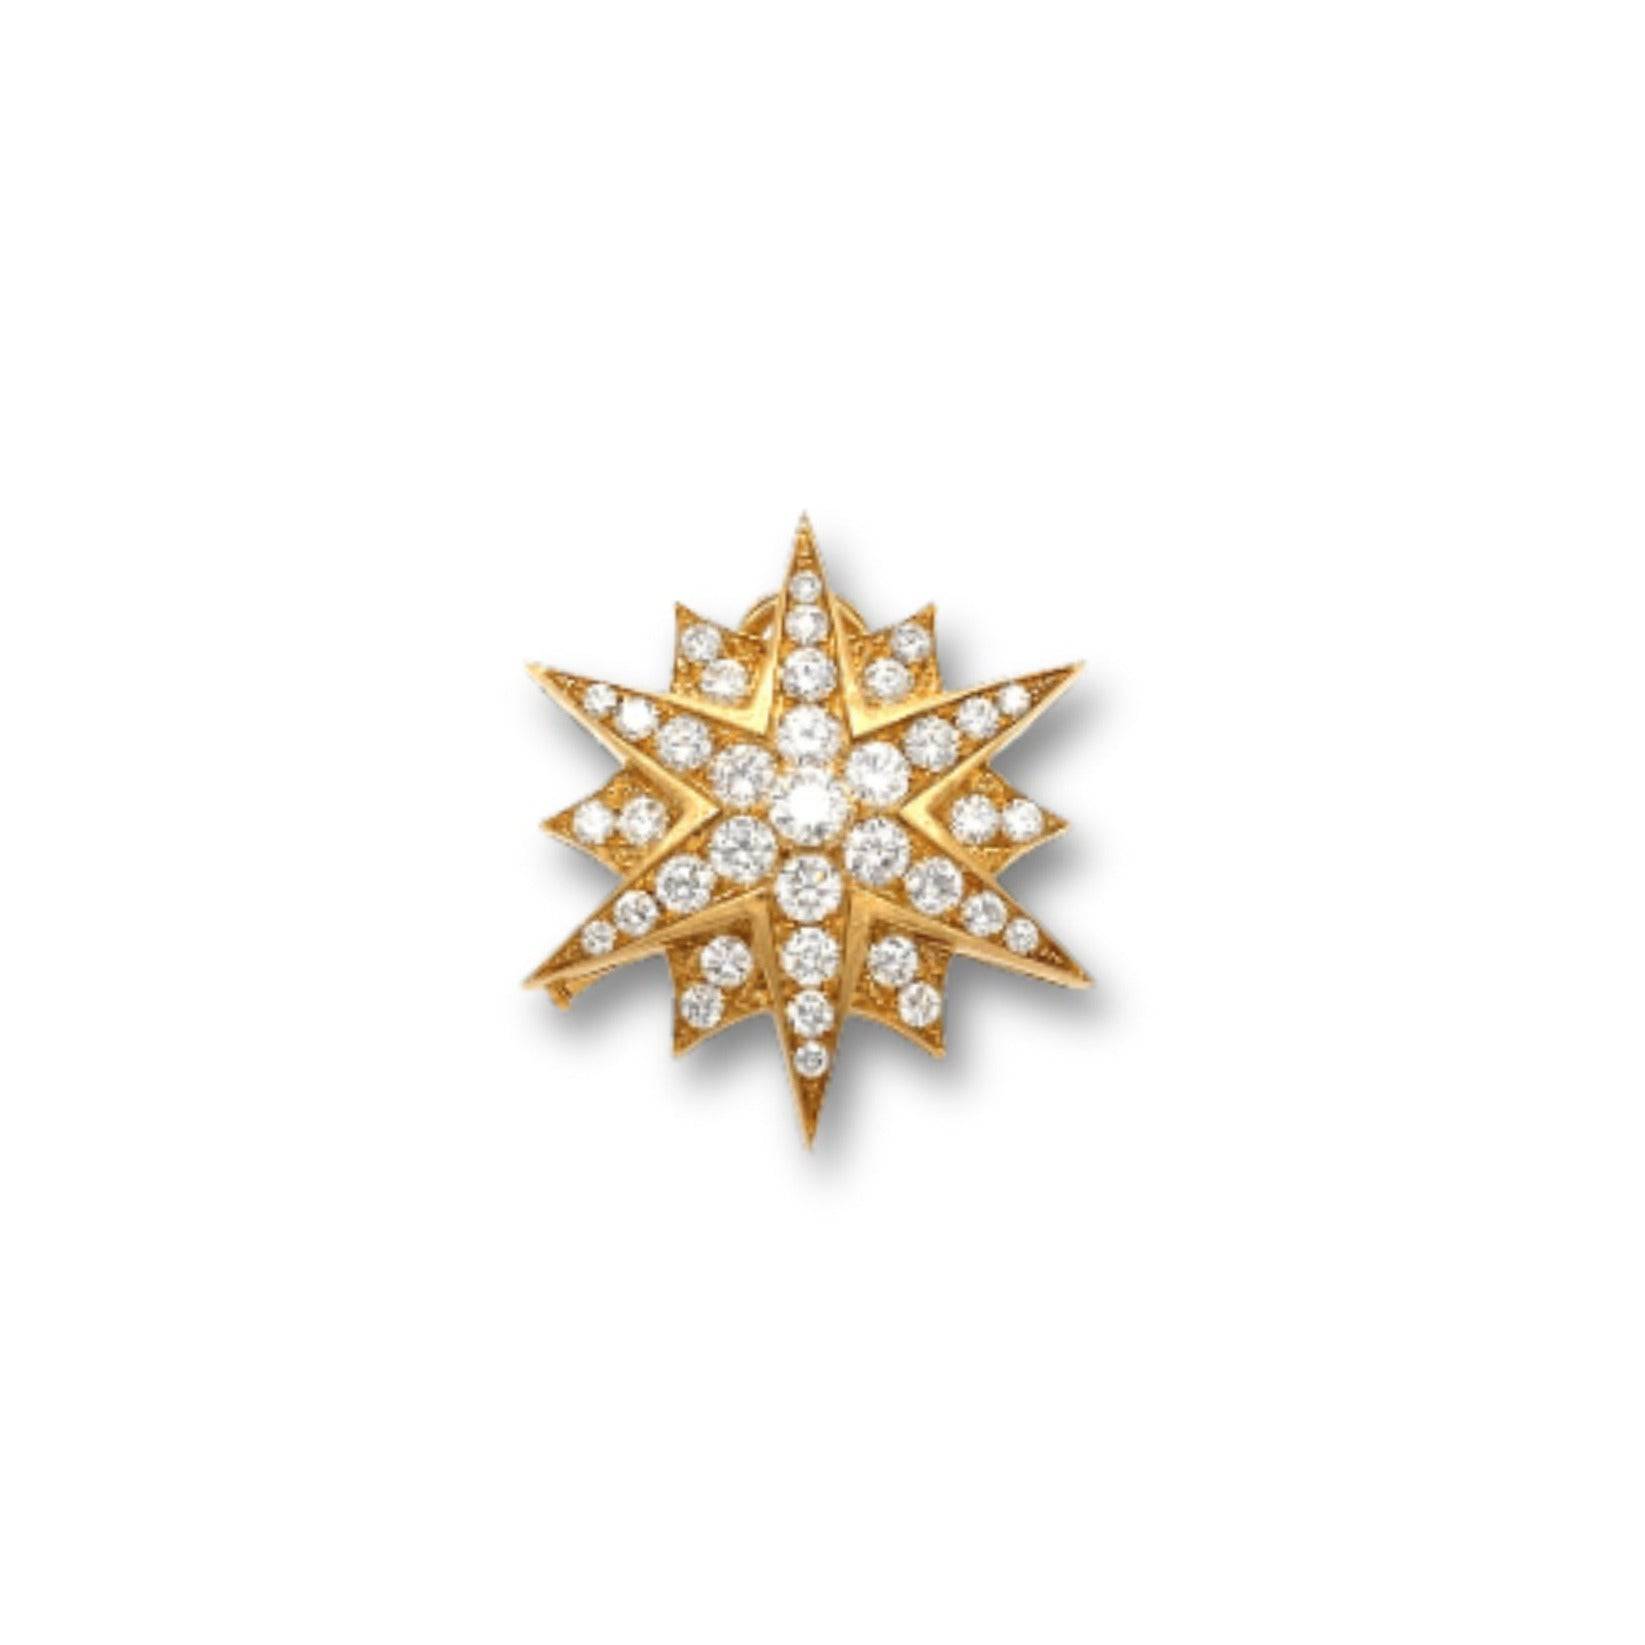 transformational-diamond-star-pendant-brooch-gia-certificate-dho0364-45167129231524.jpg